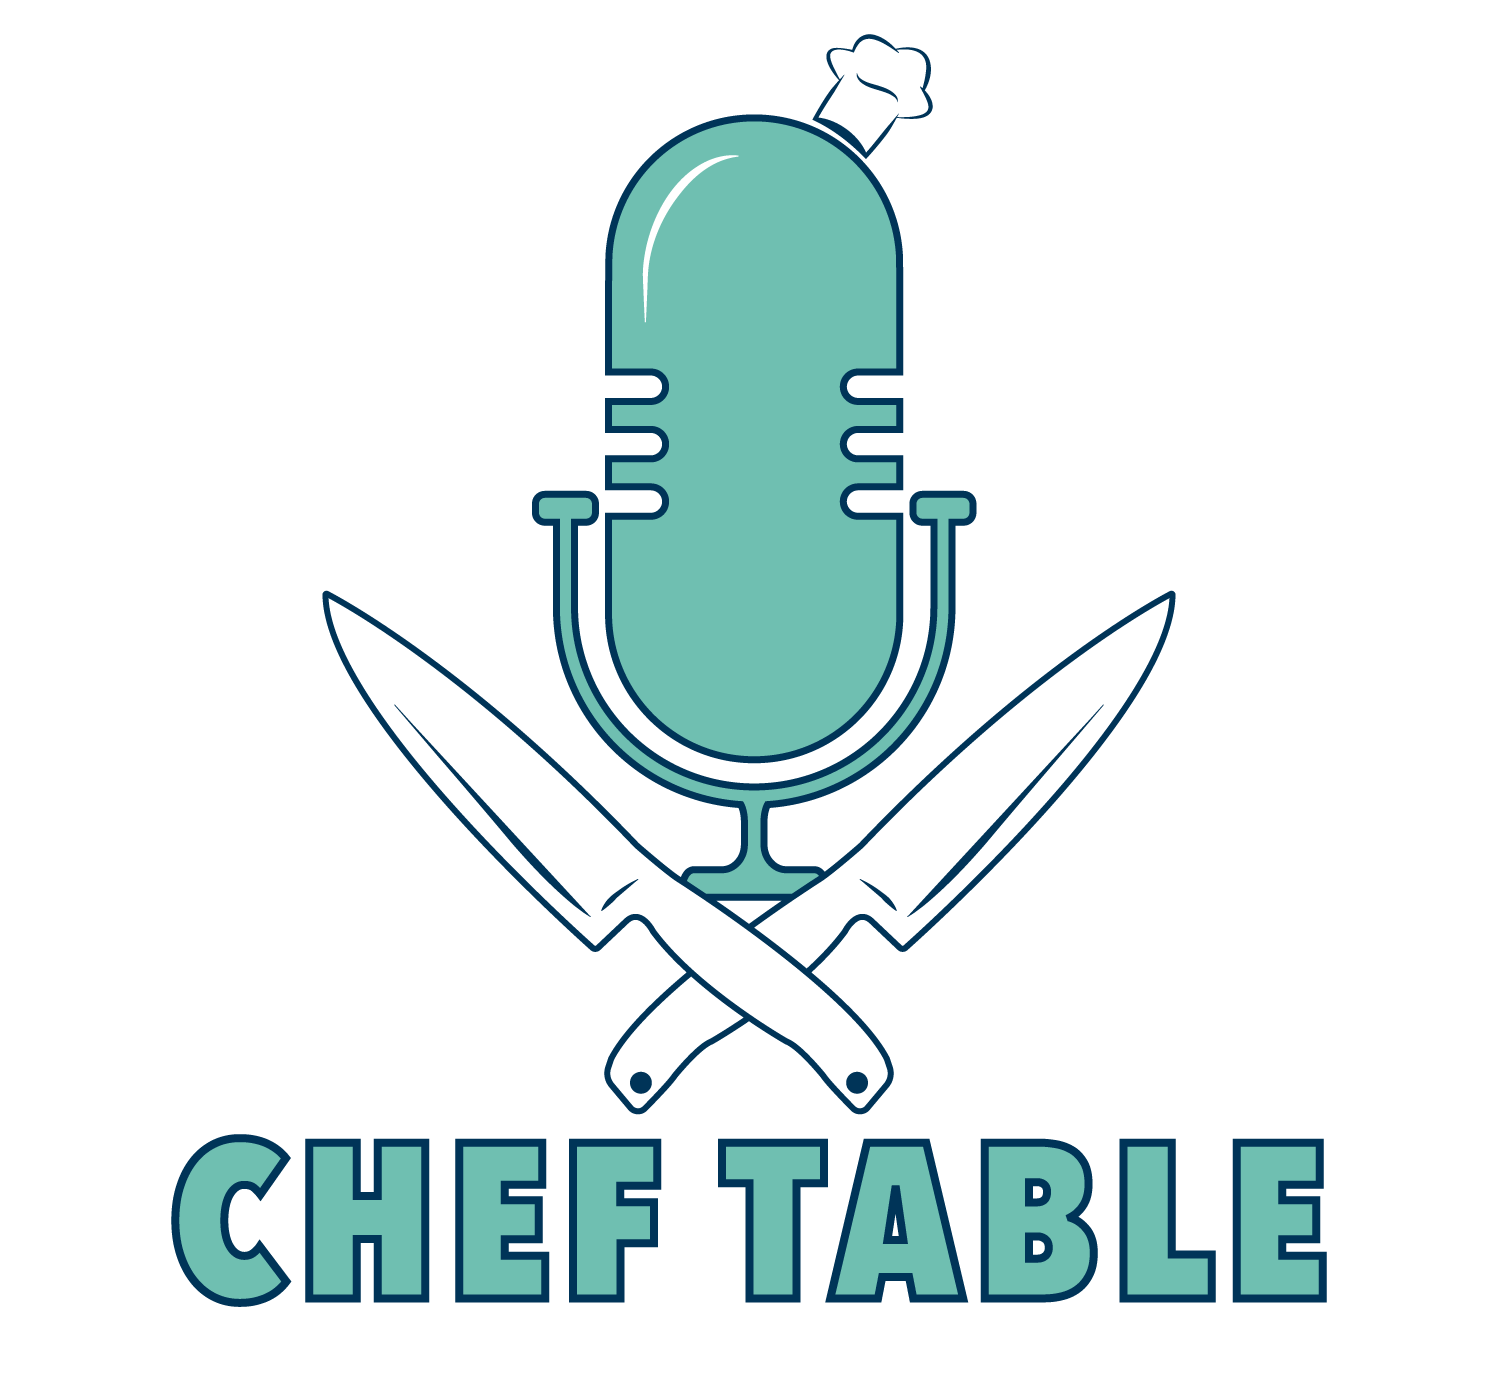 Hotel & Restaurant Times podcast logo